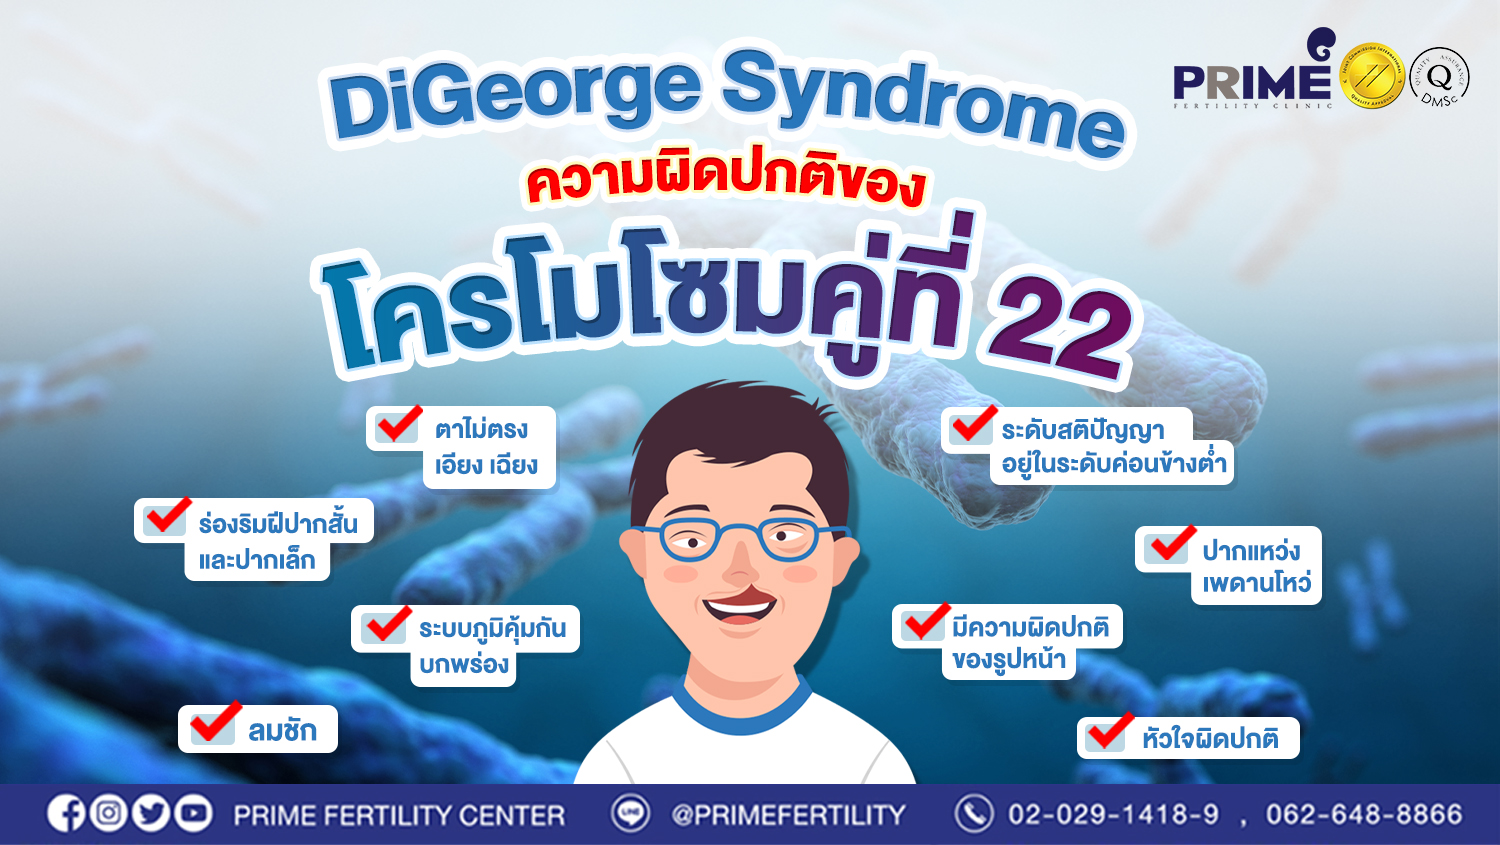 DiGeorge syndrome ความผิดปกติของโครโมโซมคู่ที่ 22